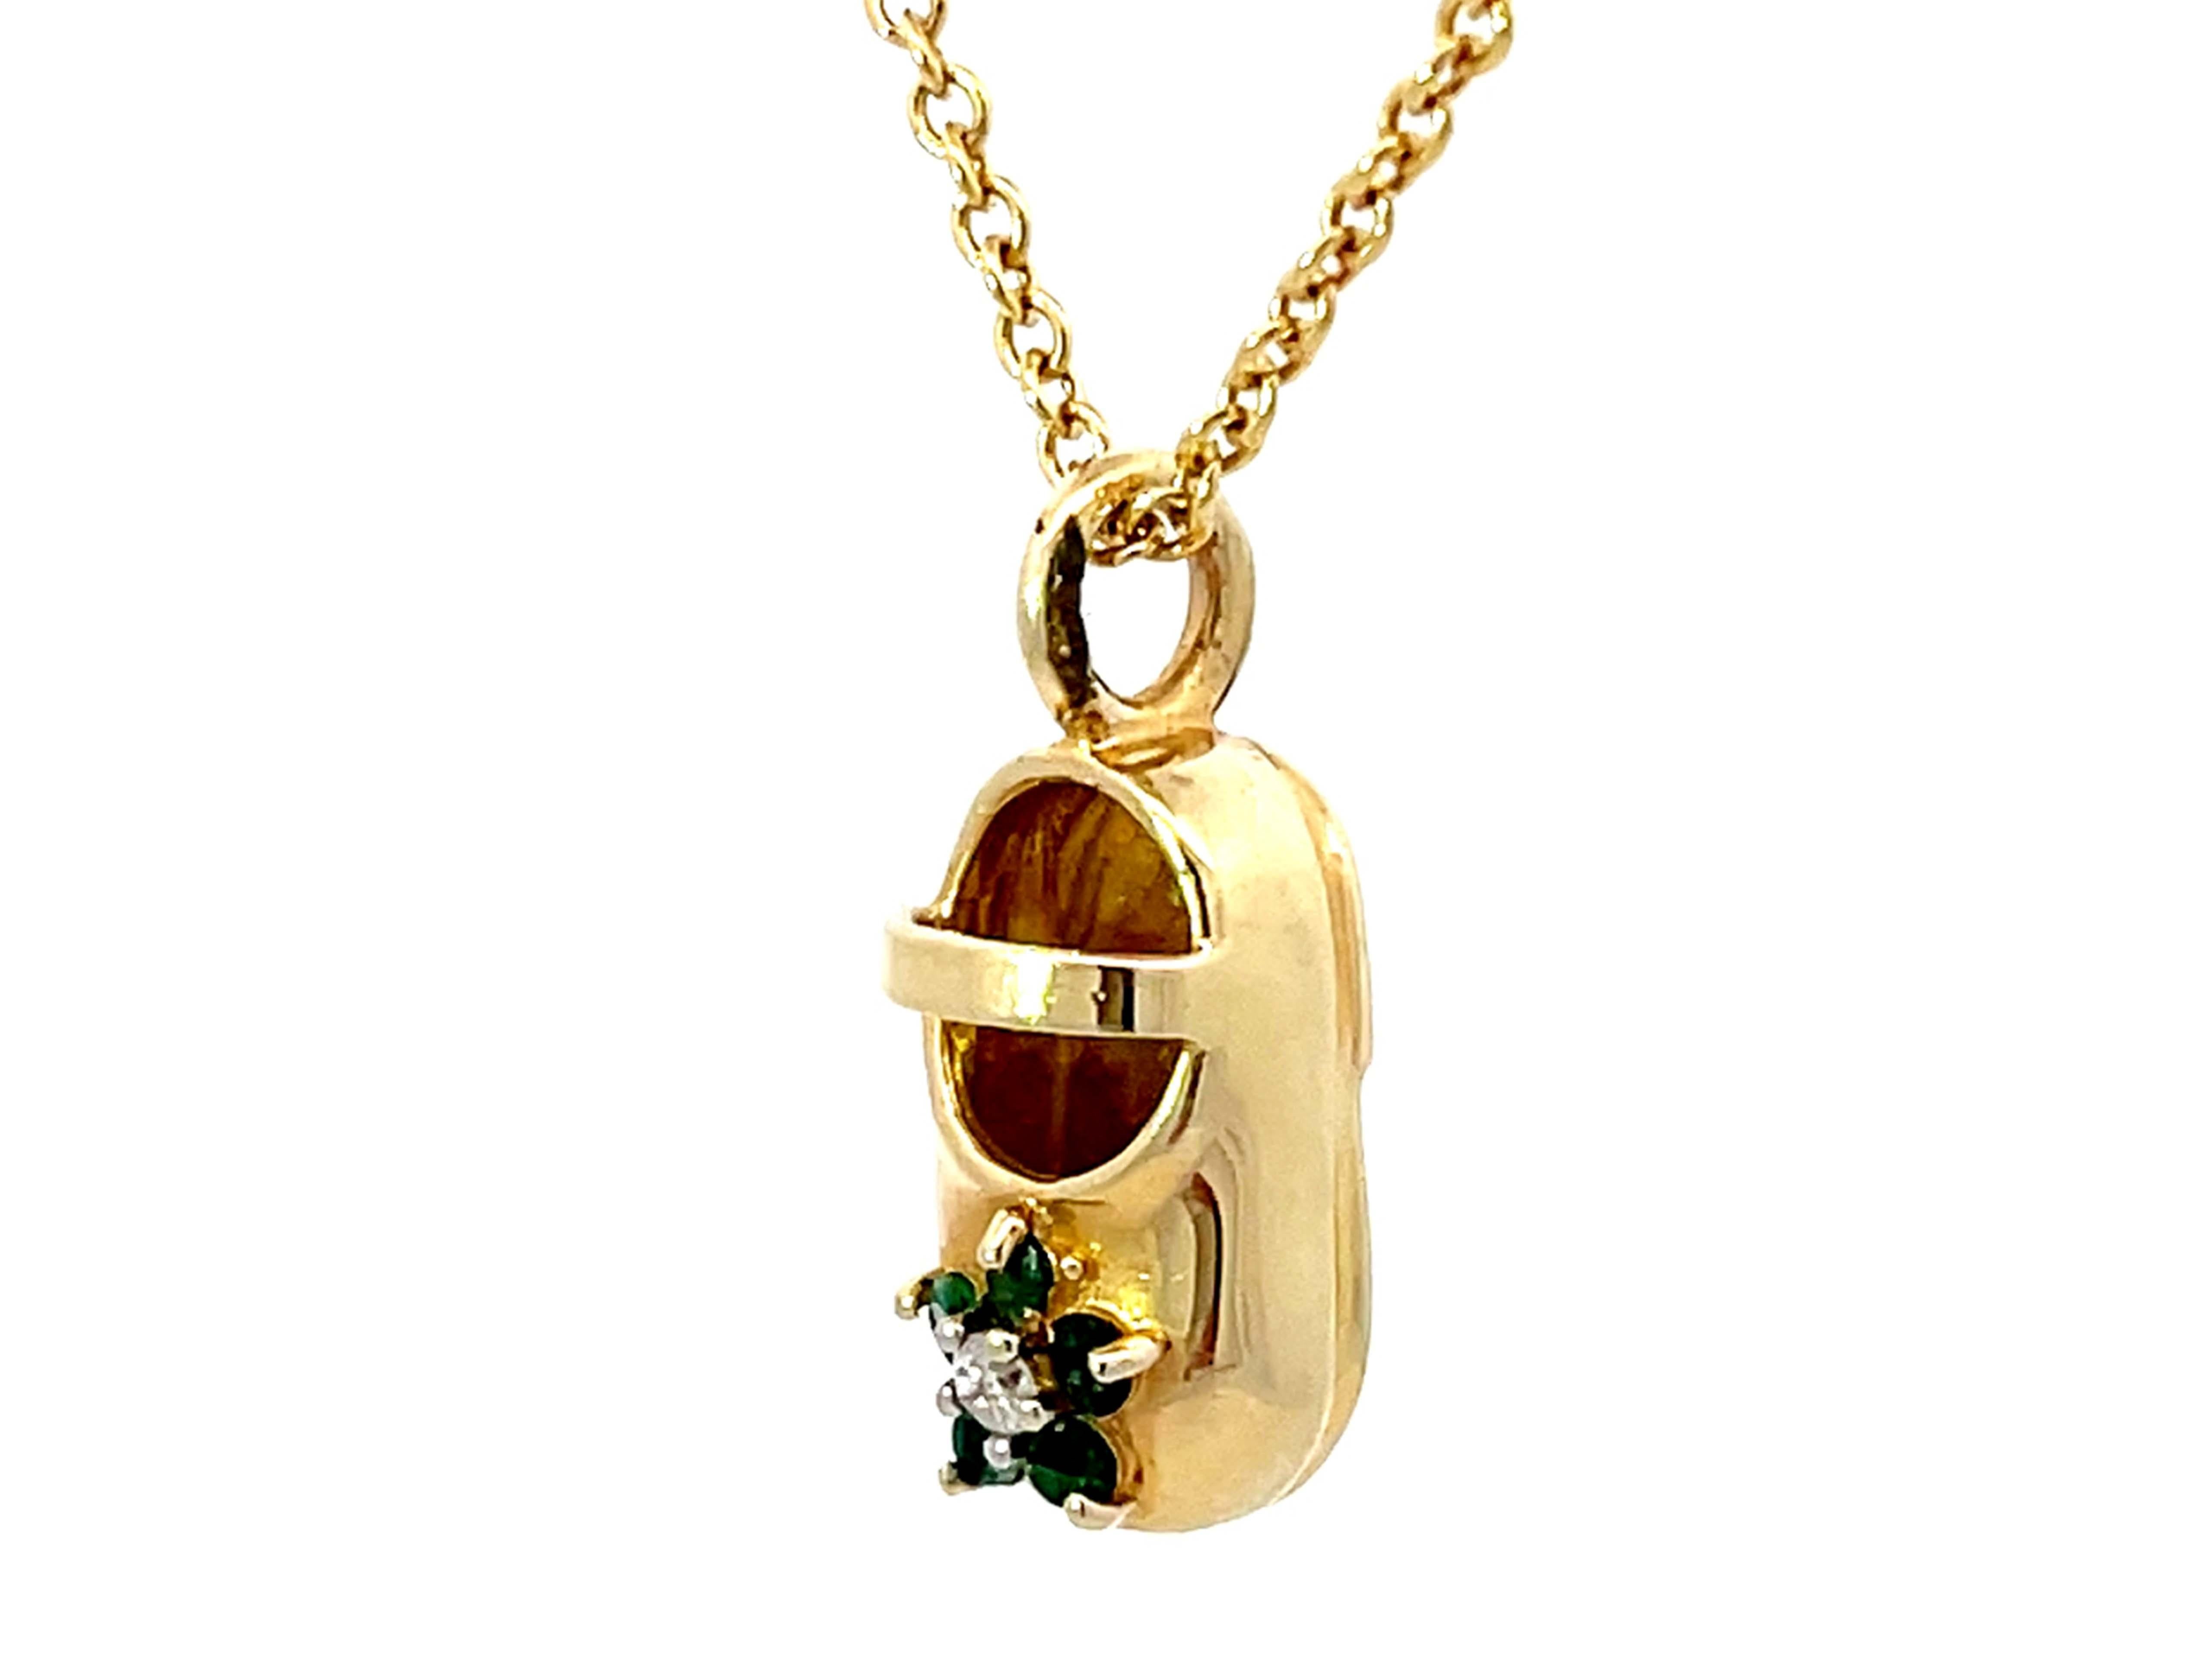 Brilliant Cut Emerald Diamond Flower Shoe Pendant Necklace Solid 14K Yellow Gold For Sale